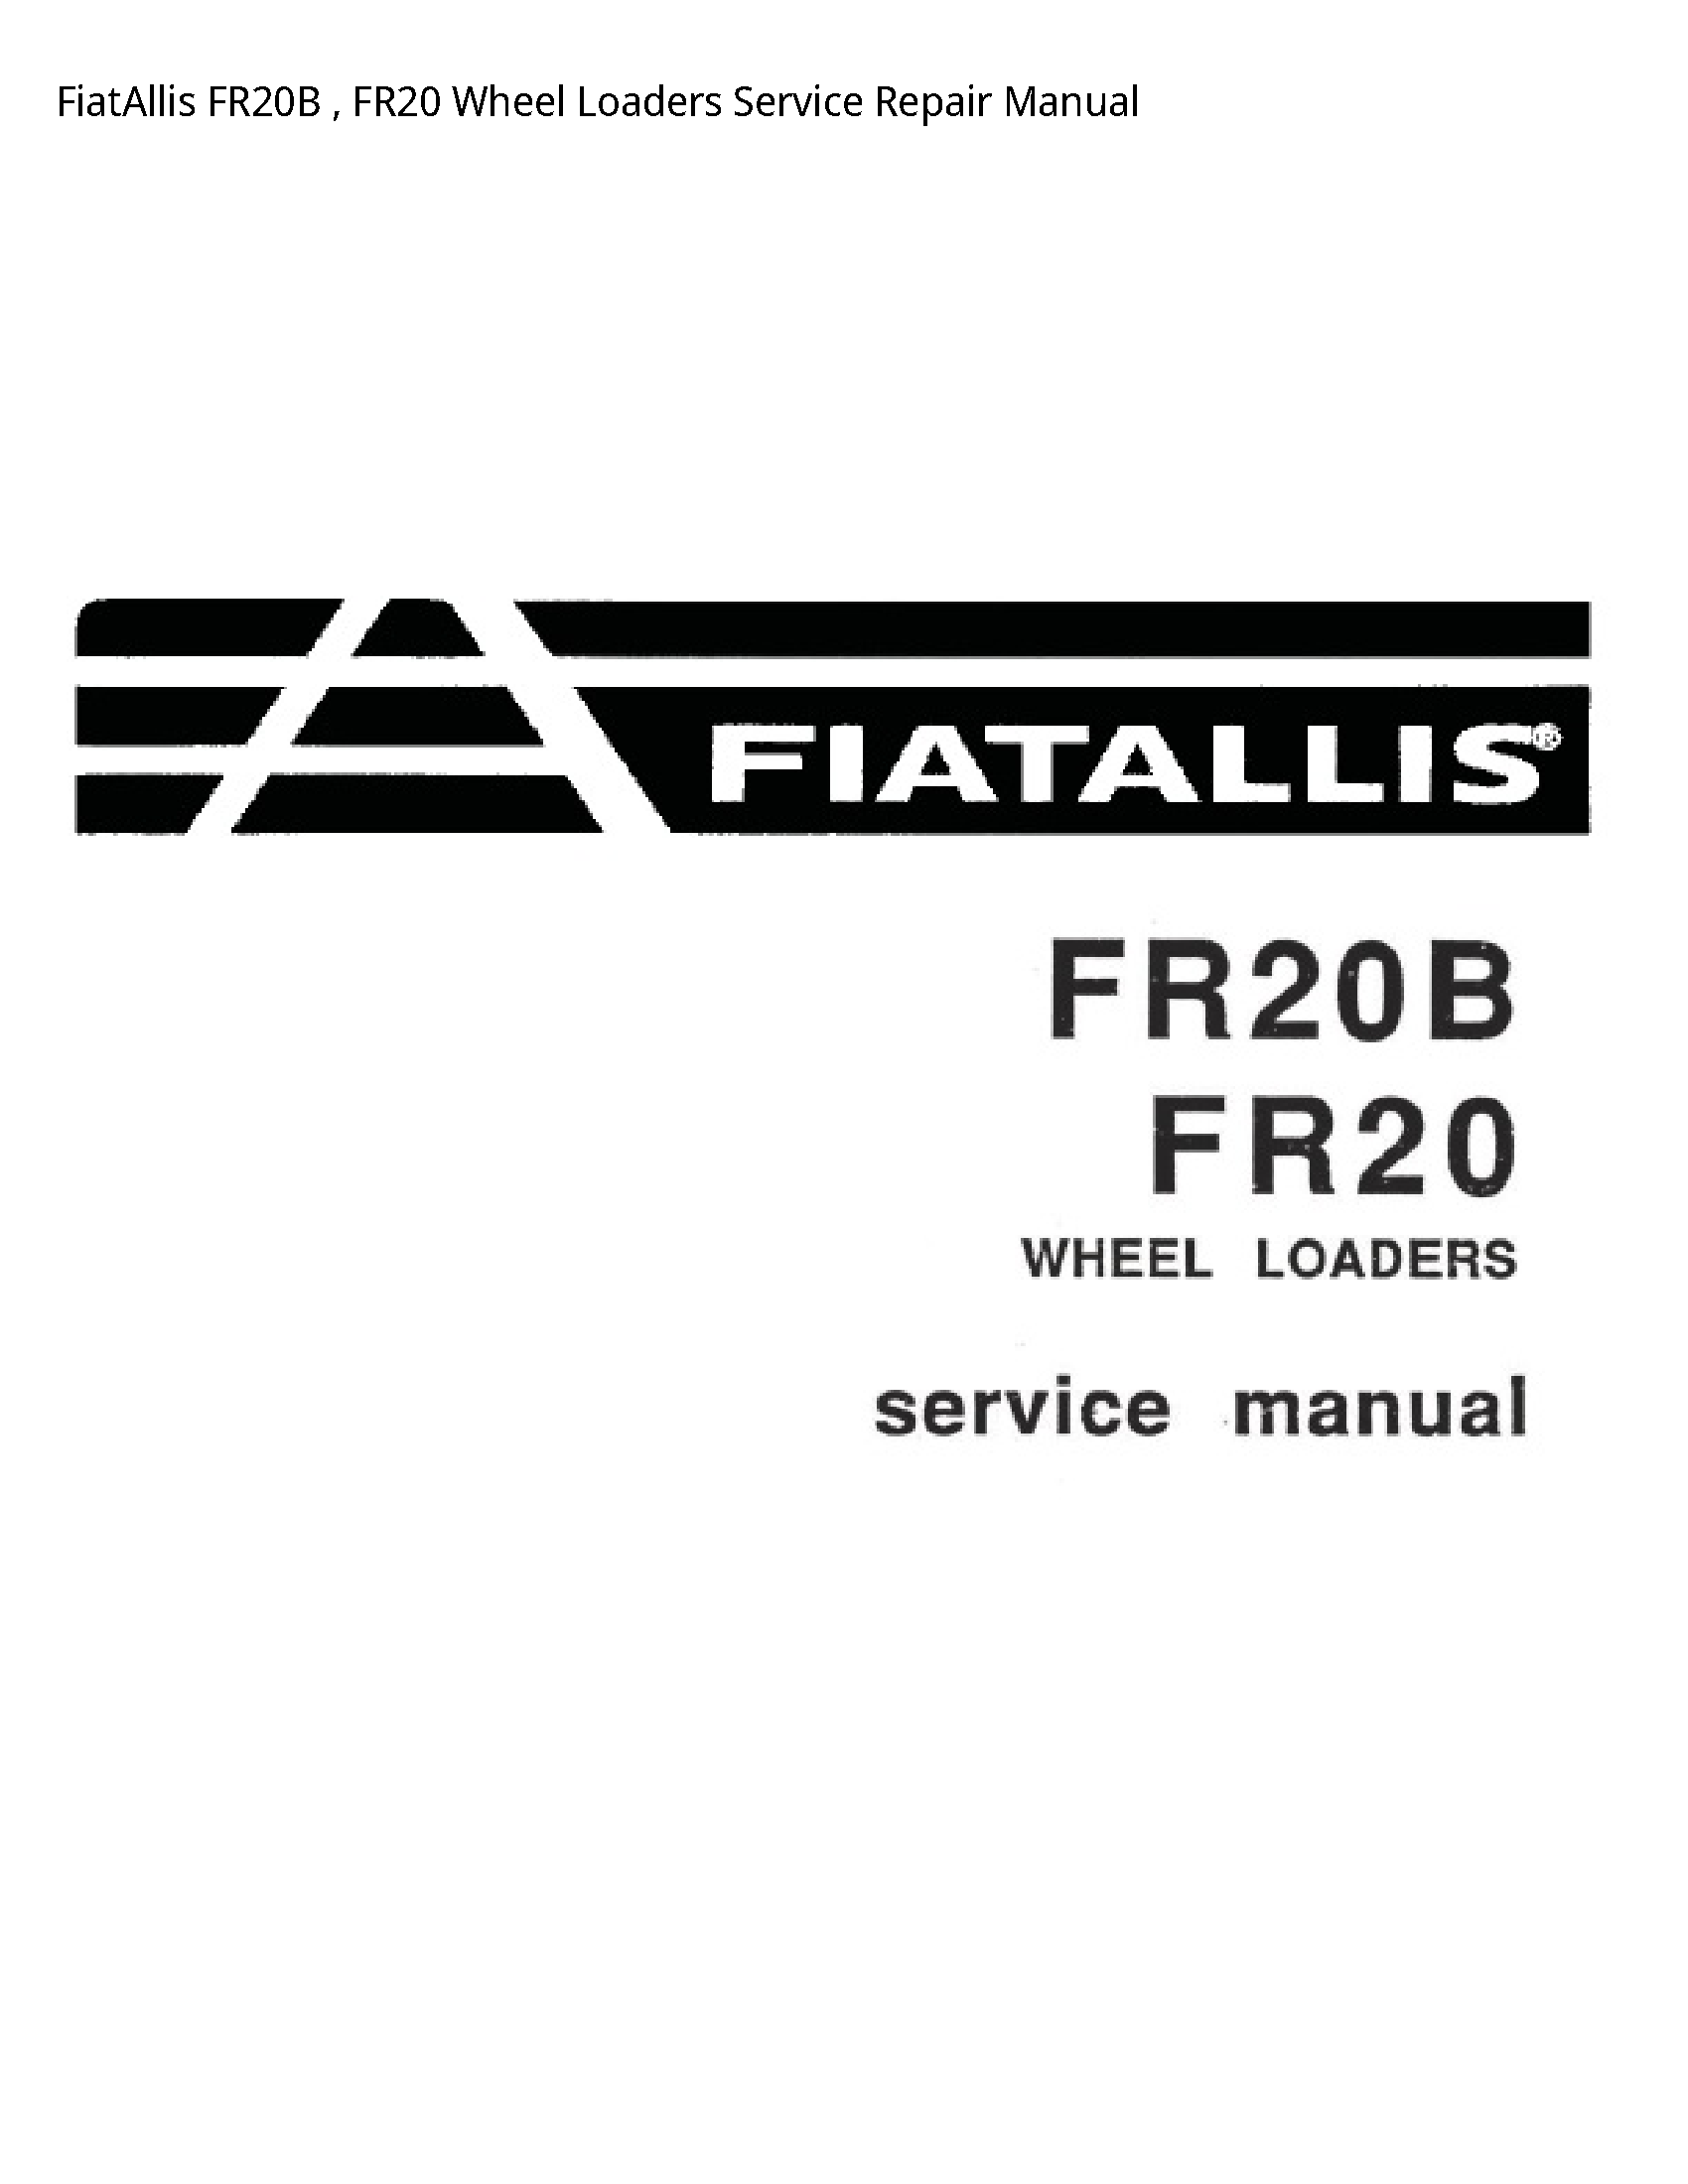 Fiatallis FR20B Wheel Loaders manual